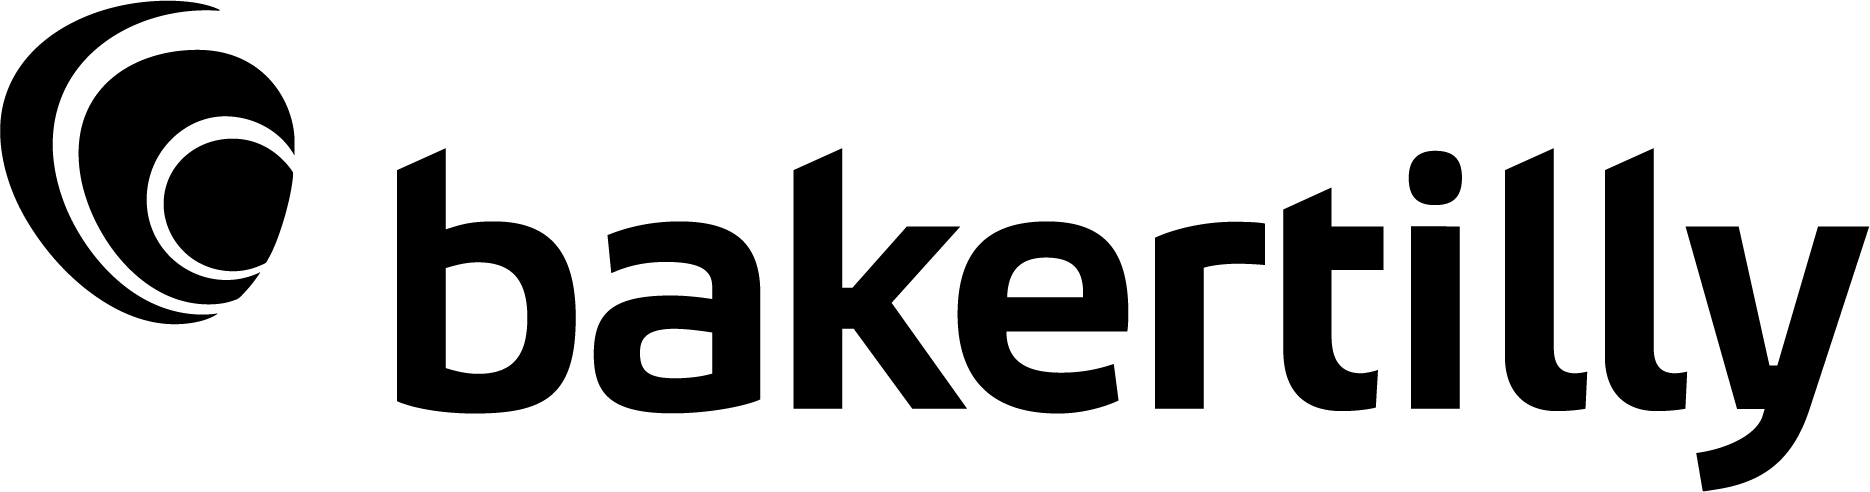 bakertilly logo